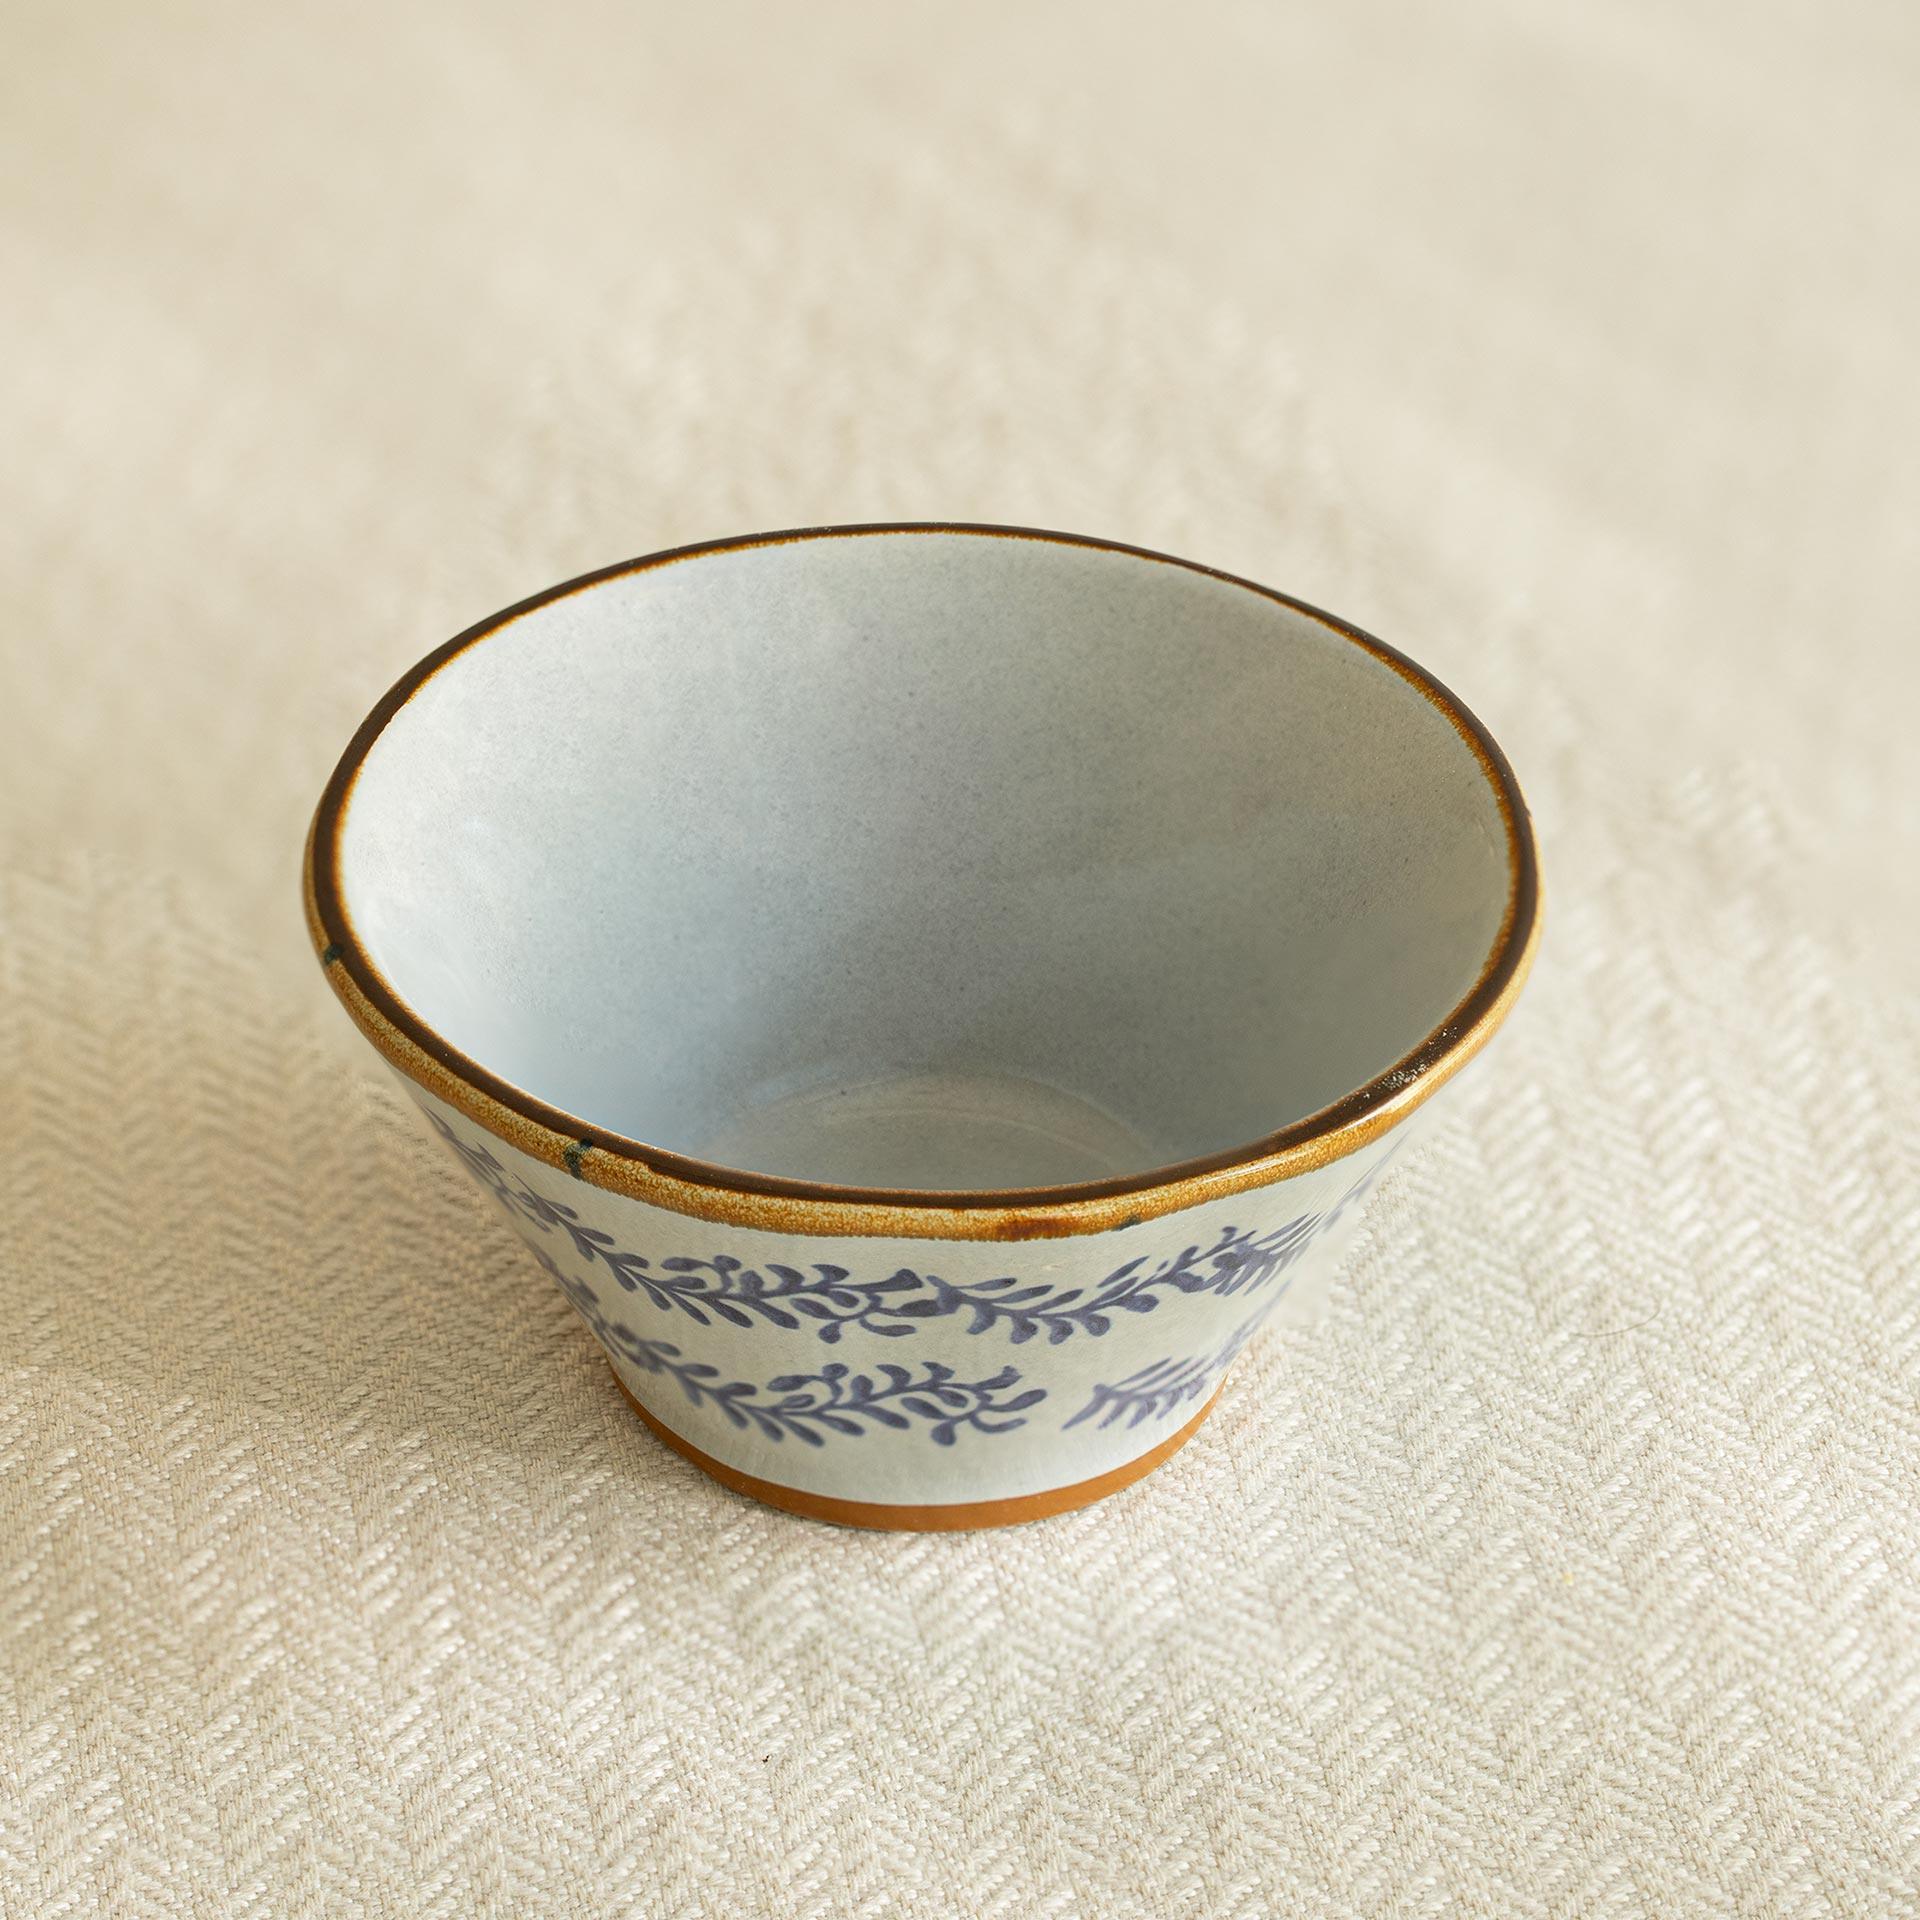 Ocean Heart Ceramic Bowl - Small